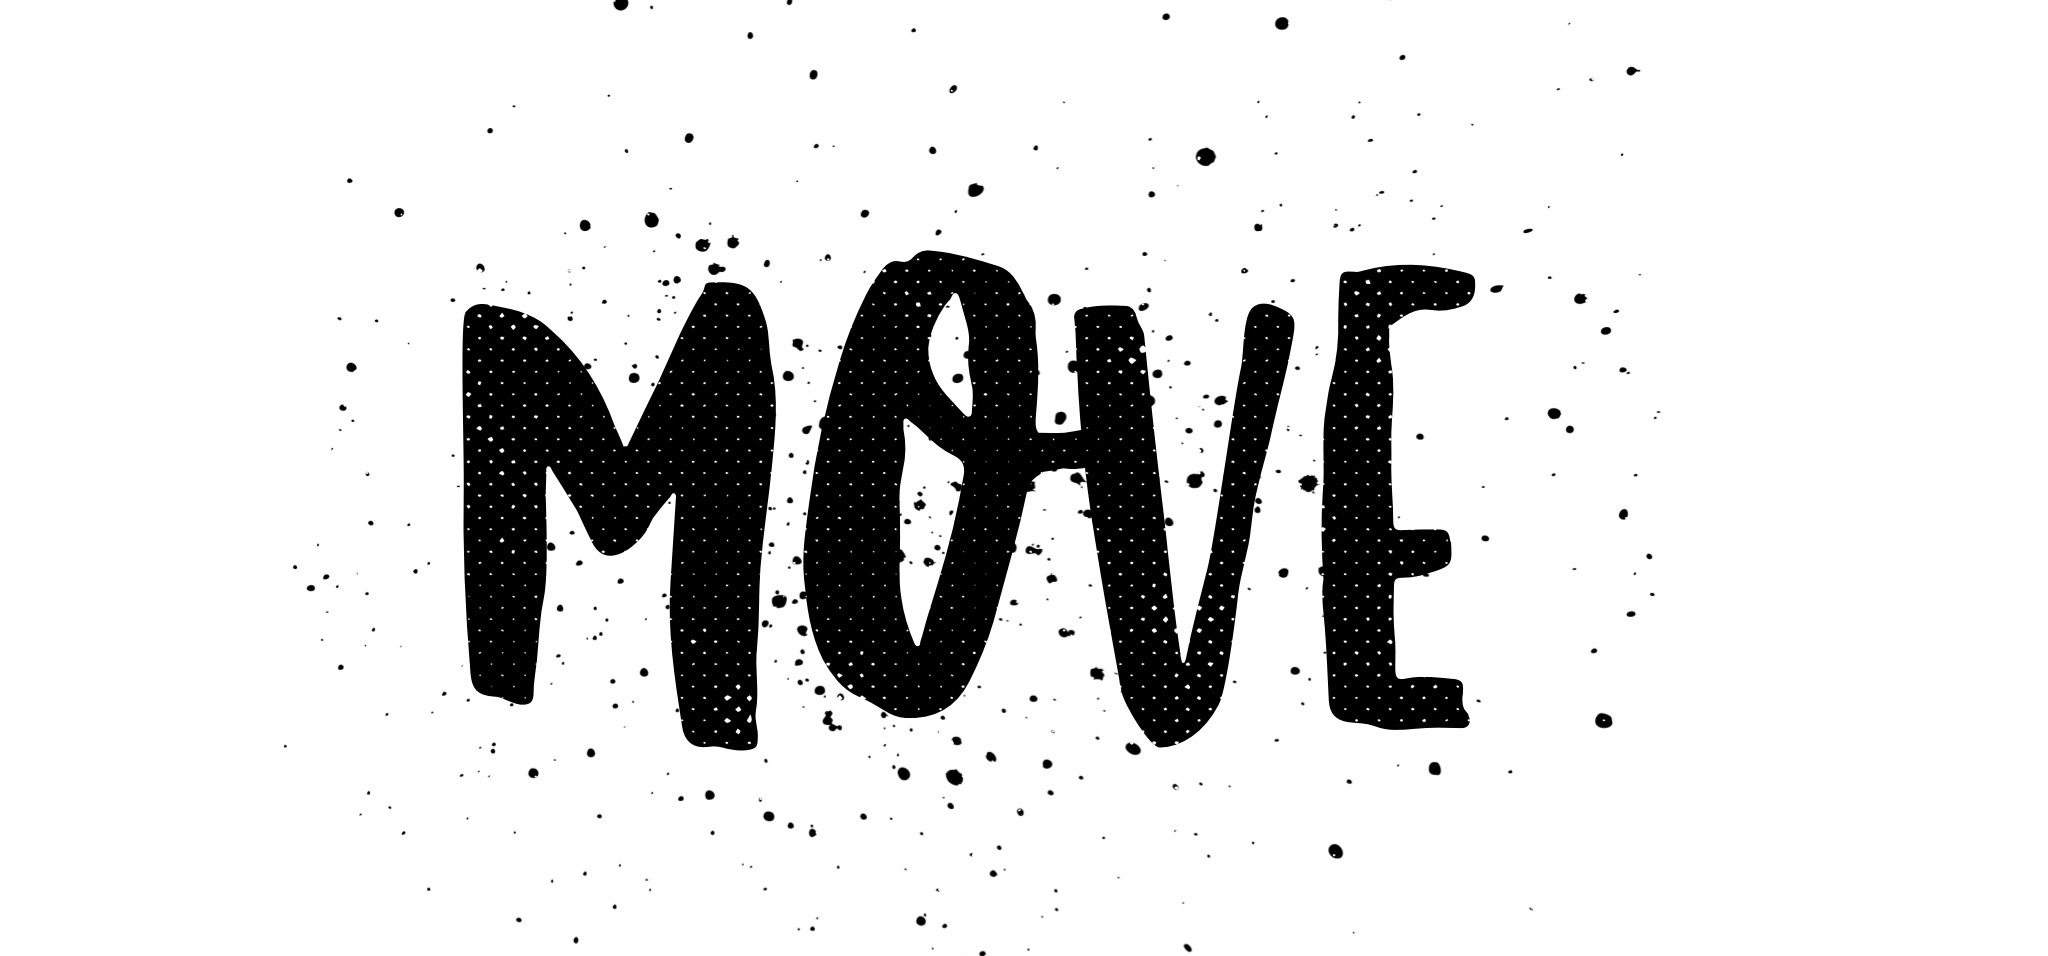 My moving words. Move слово. Move Word. Logo Word без фона. Google Words move.